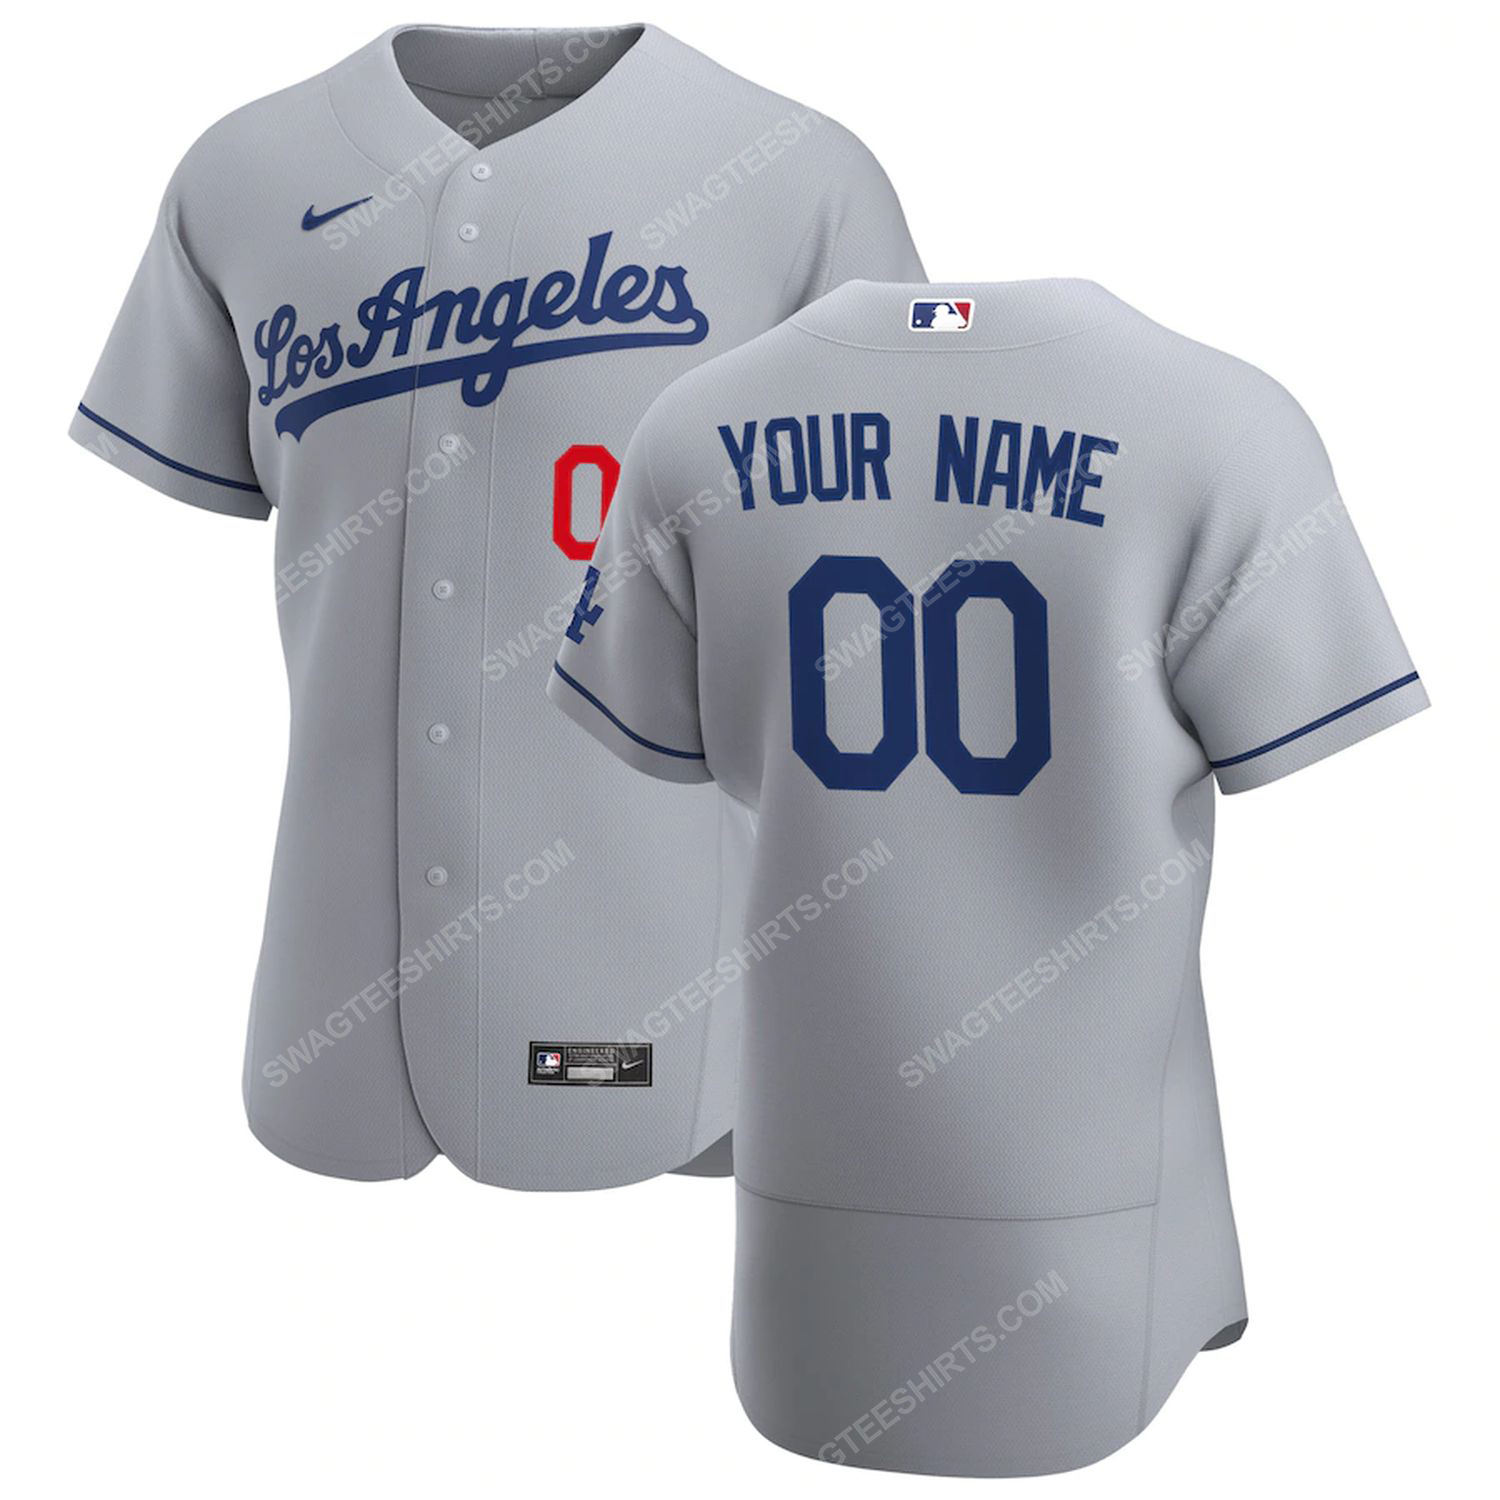 Personalized major league baseball los angeles dodgers baseball jersey-gray